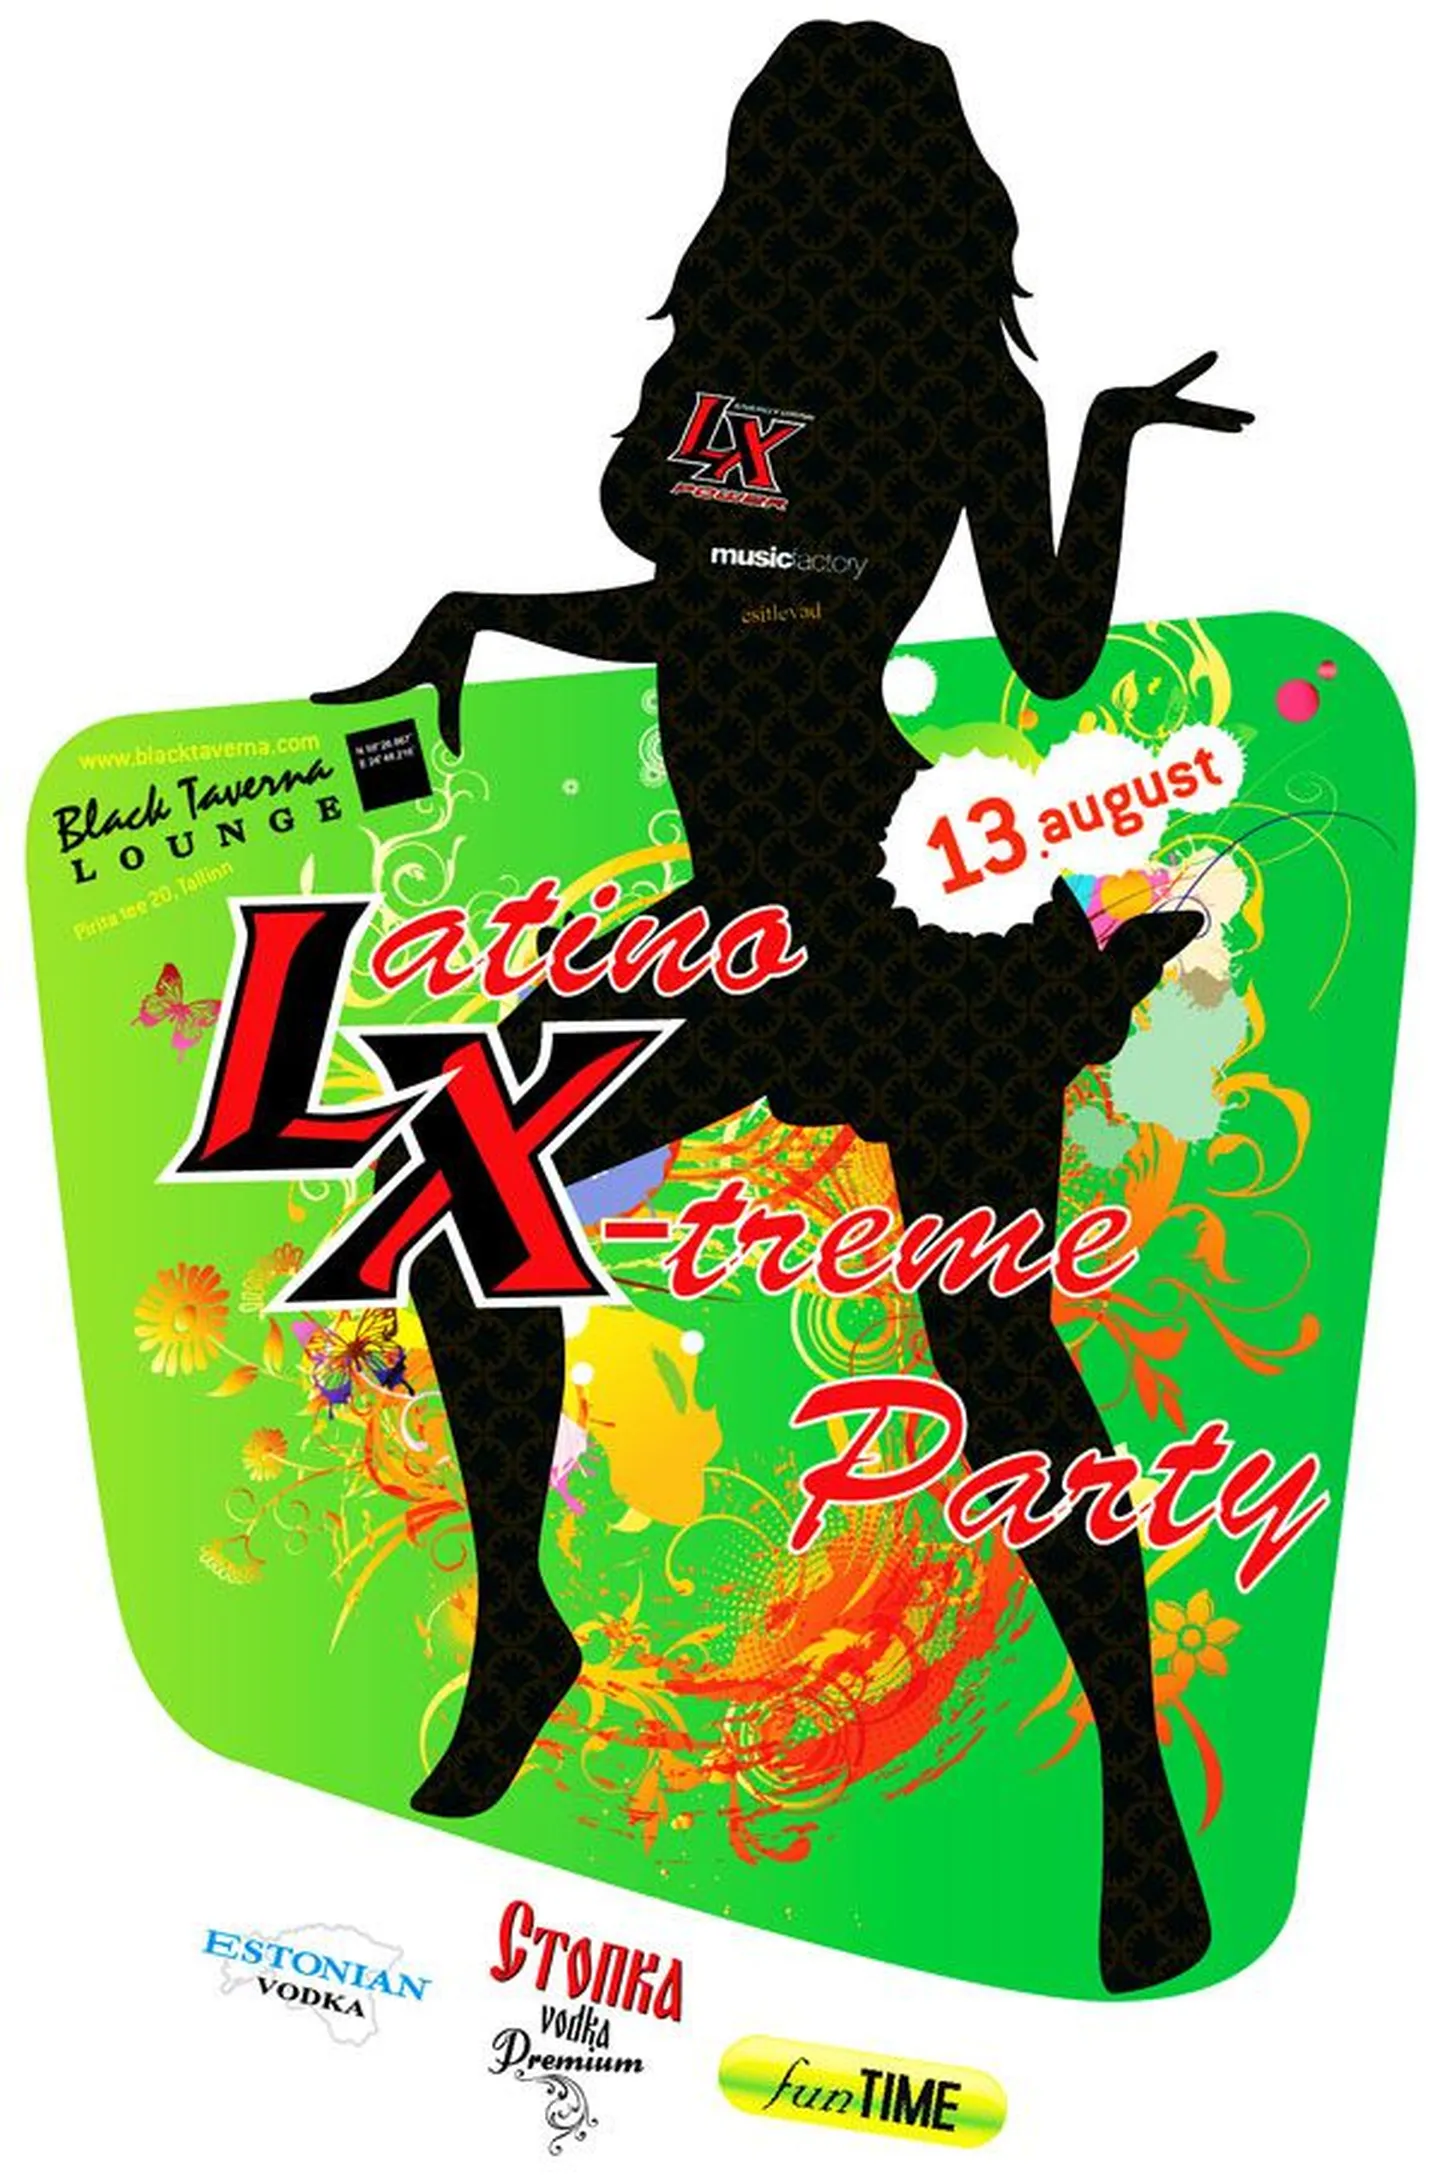 Latino X-treme party 5 juba sel reedel!